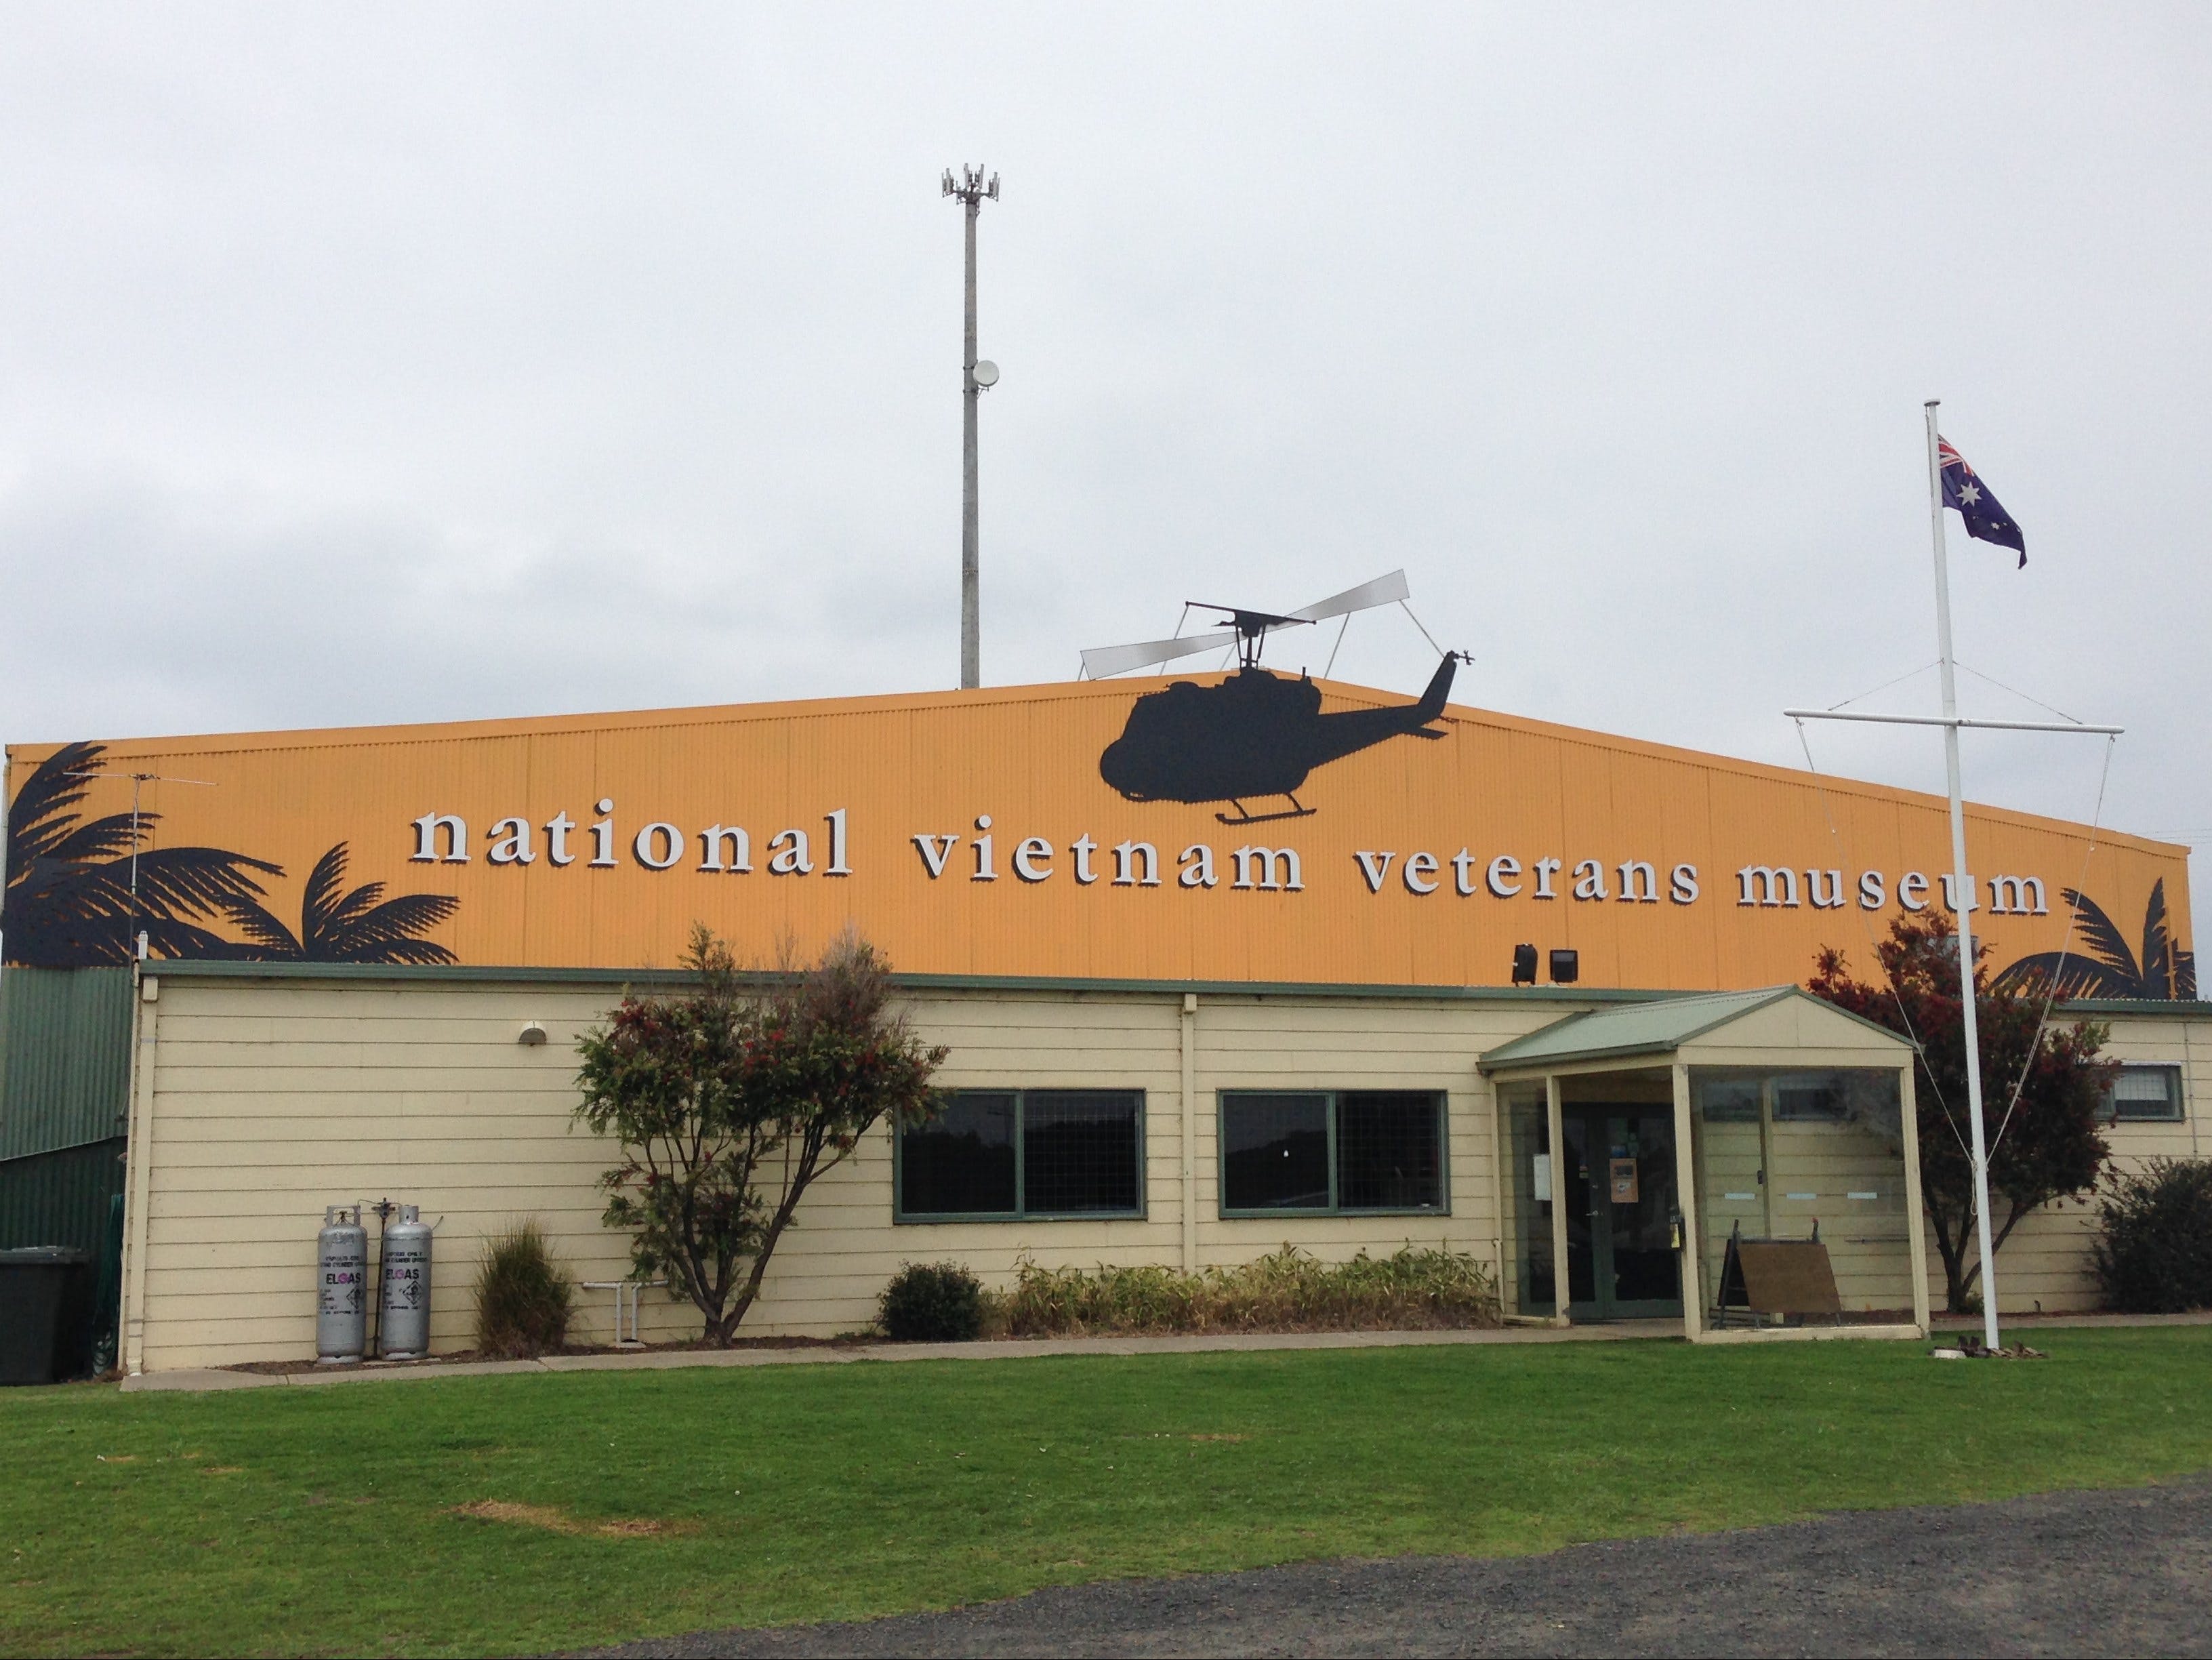 National Vietnam Veterans Museum - Accommodation Adelaide